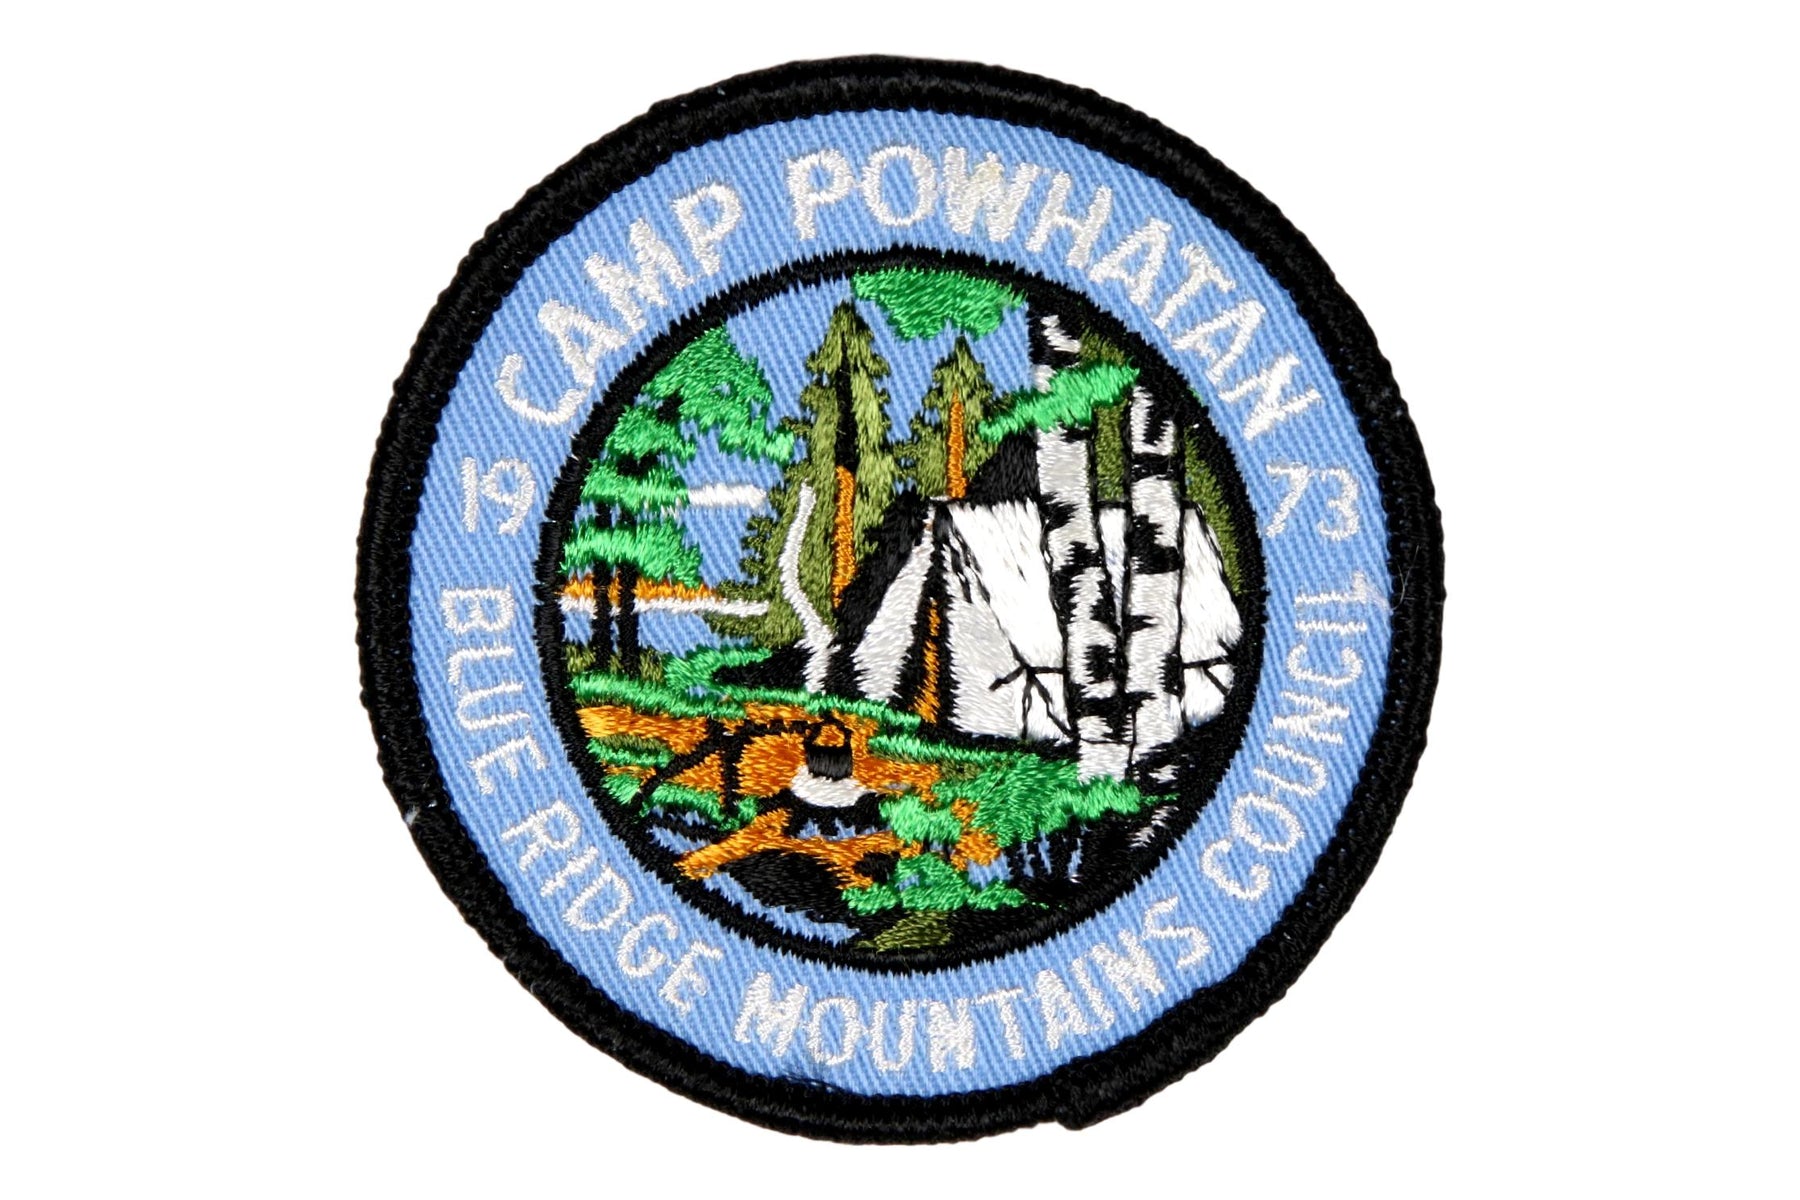 1973 Powhatan Camp Patch